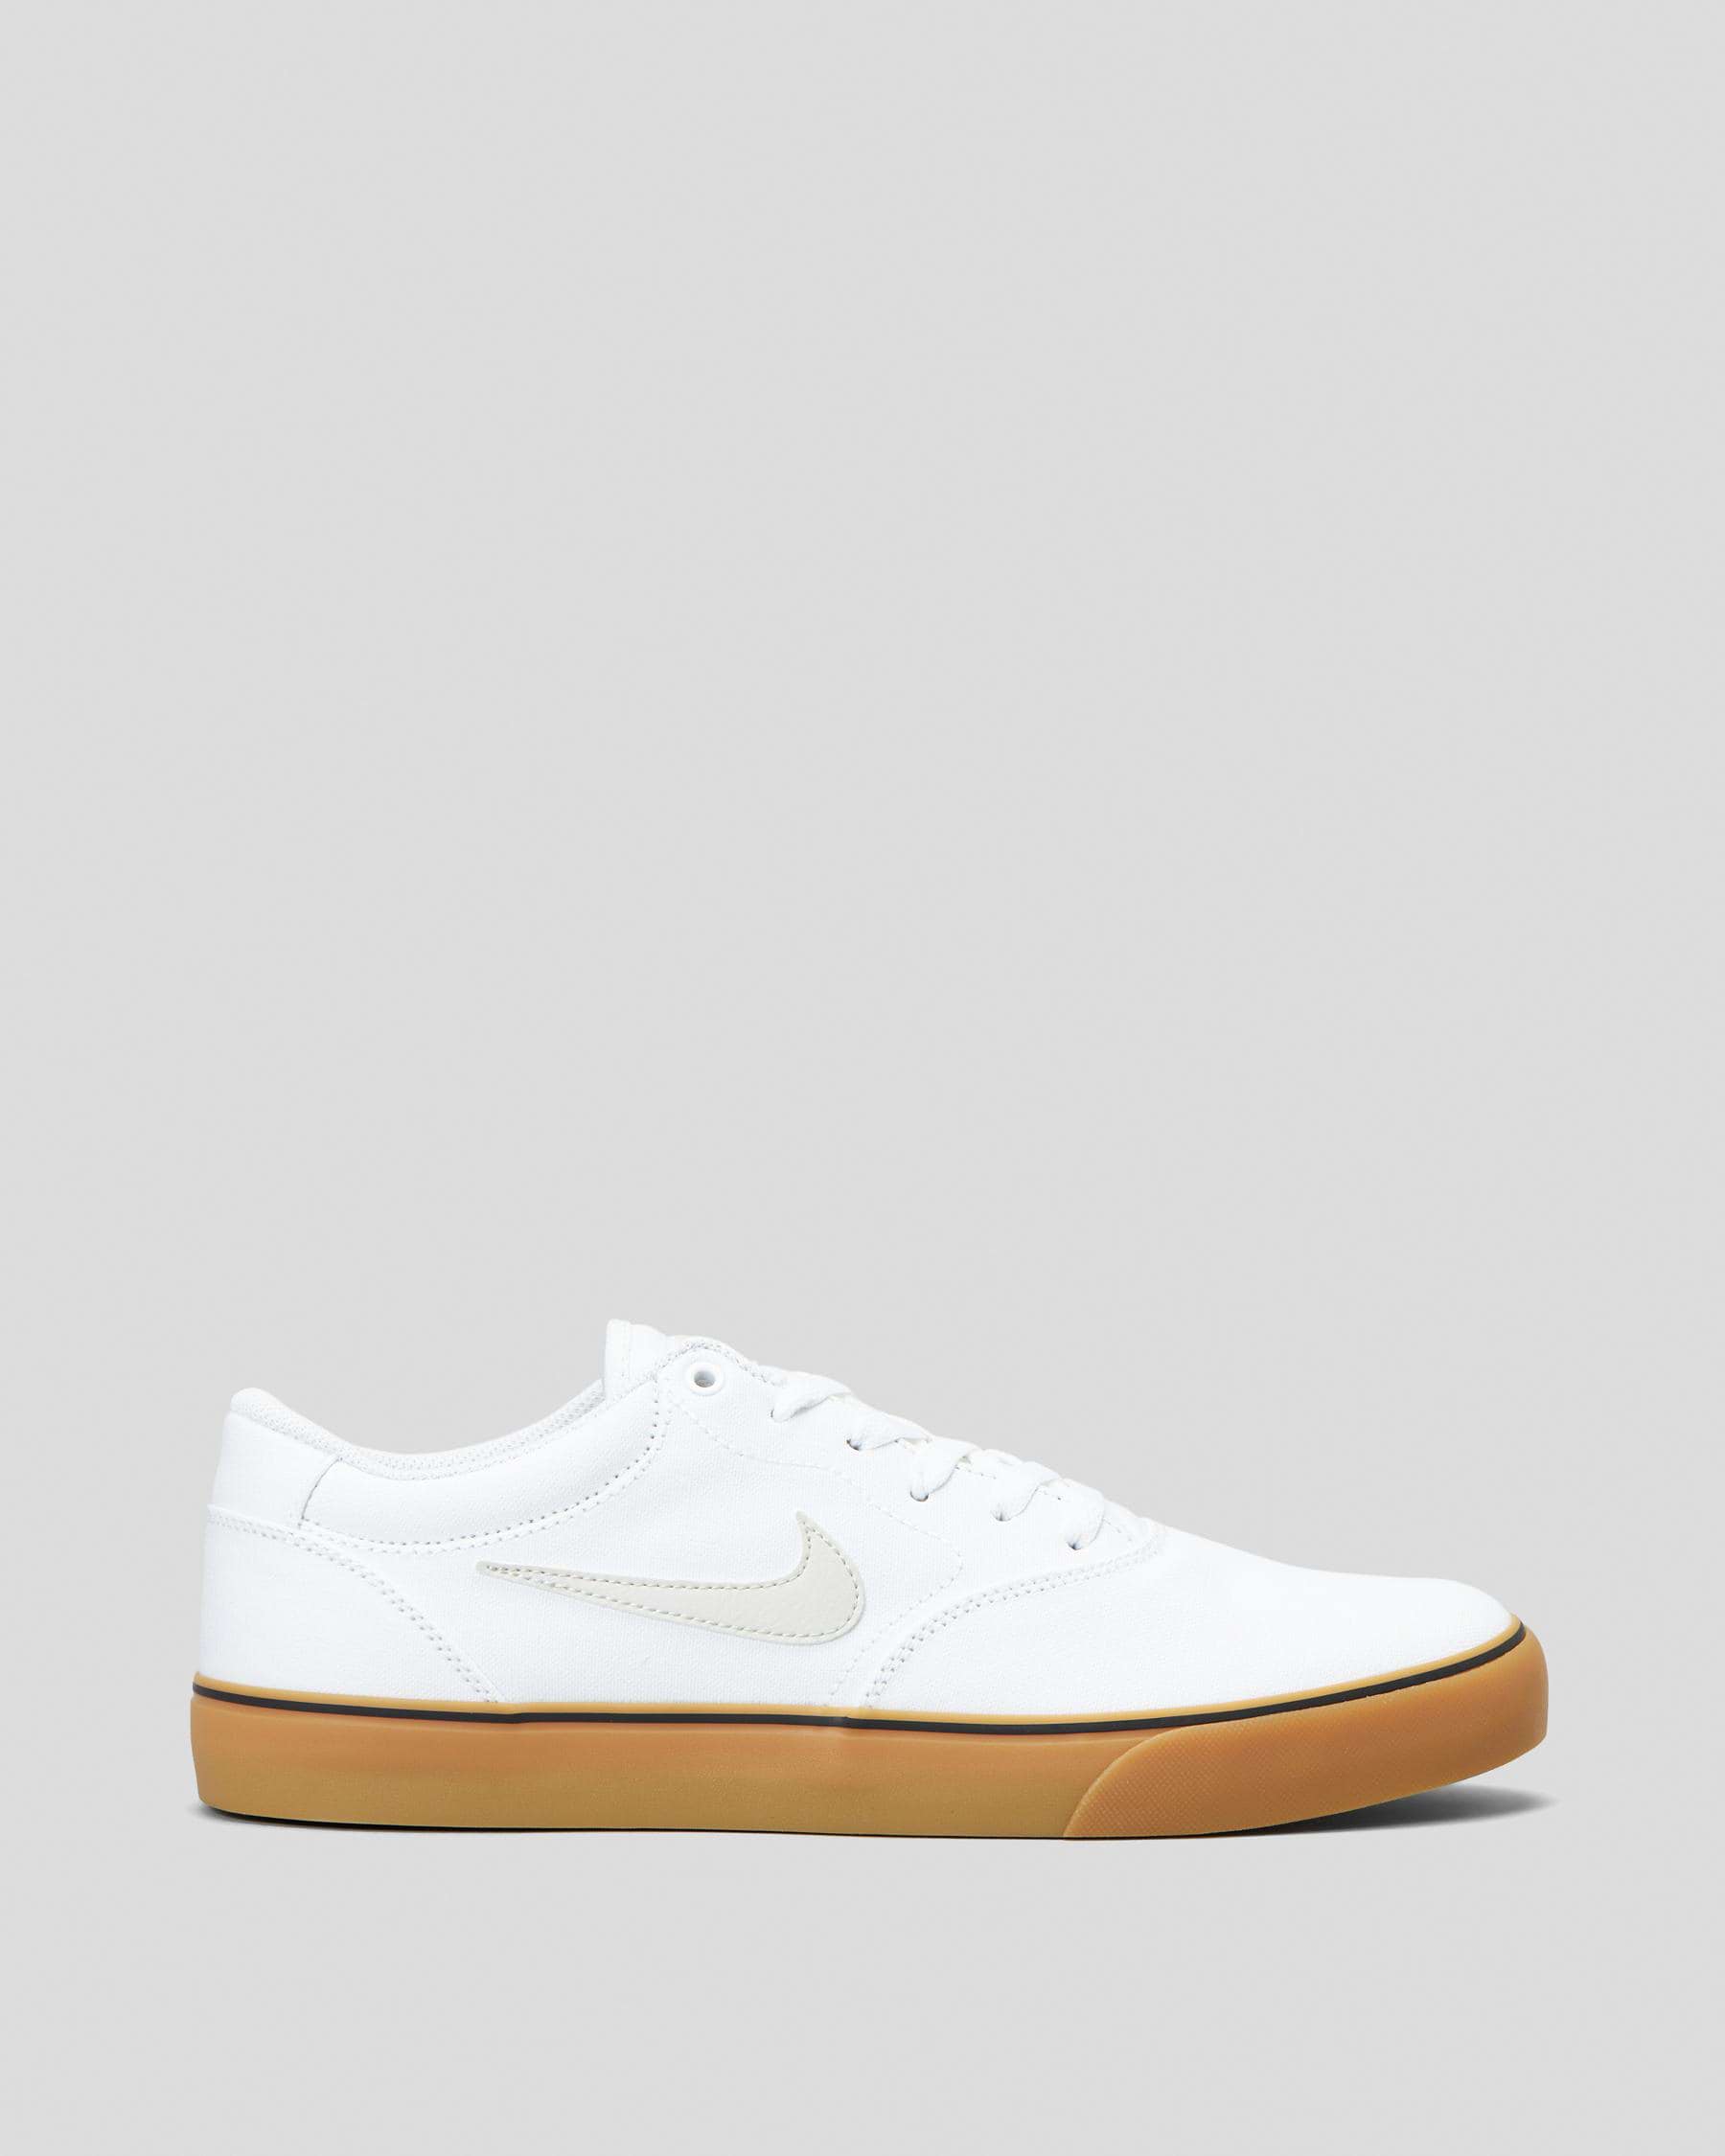 Nike Chron 2 Canvas Shoes In White/lightbone-white-gumlightbrown - Fast ...